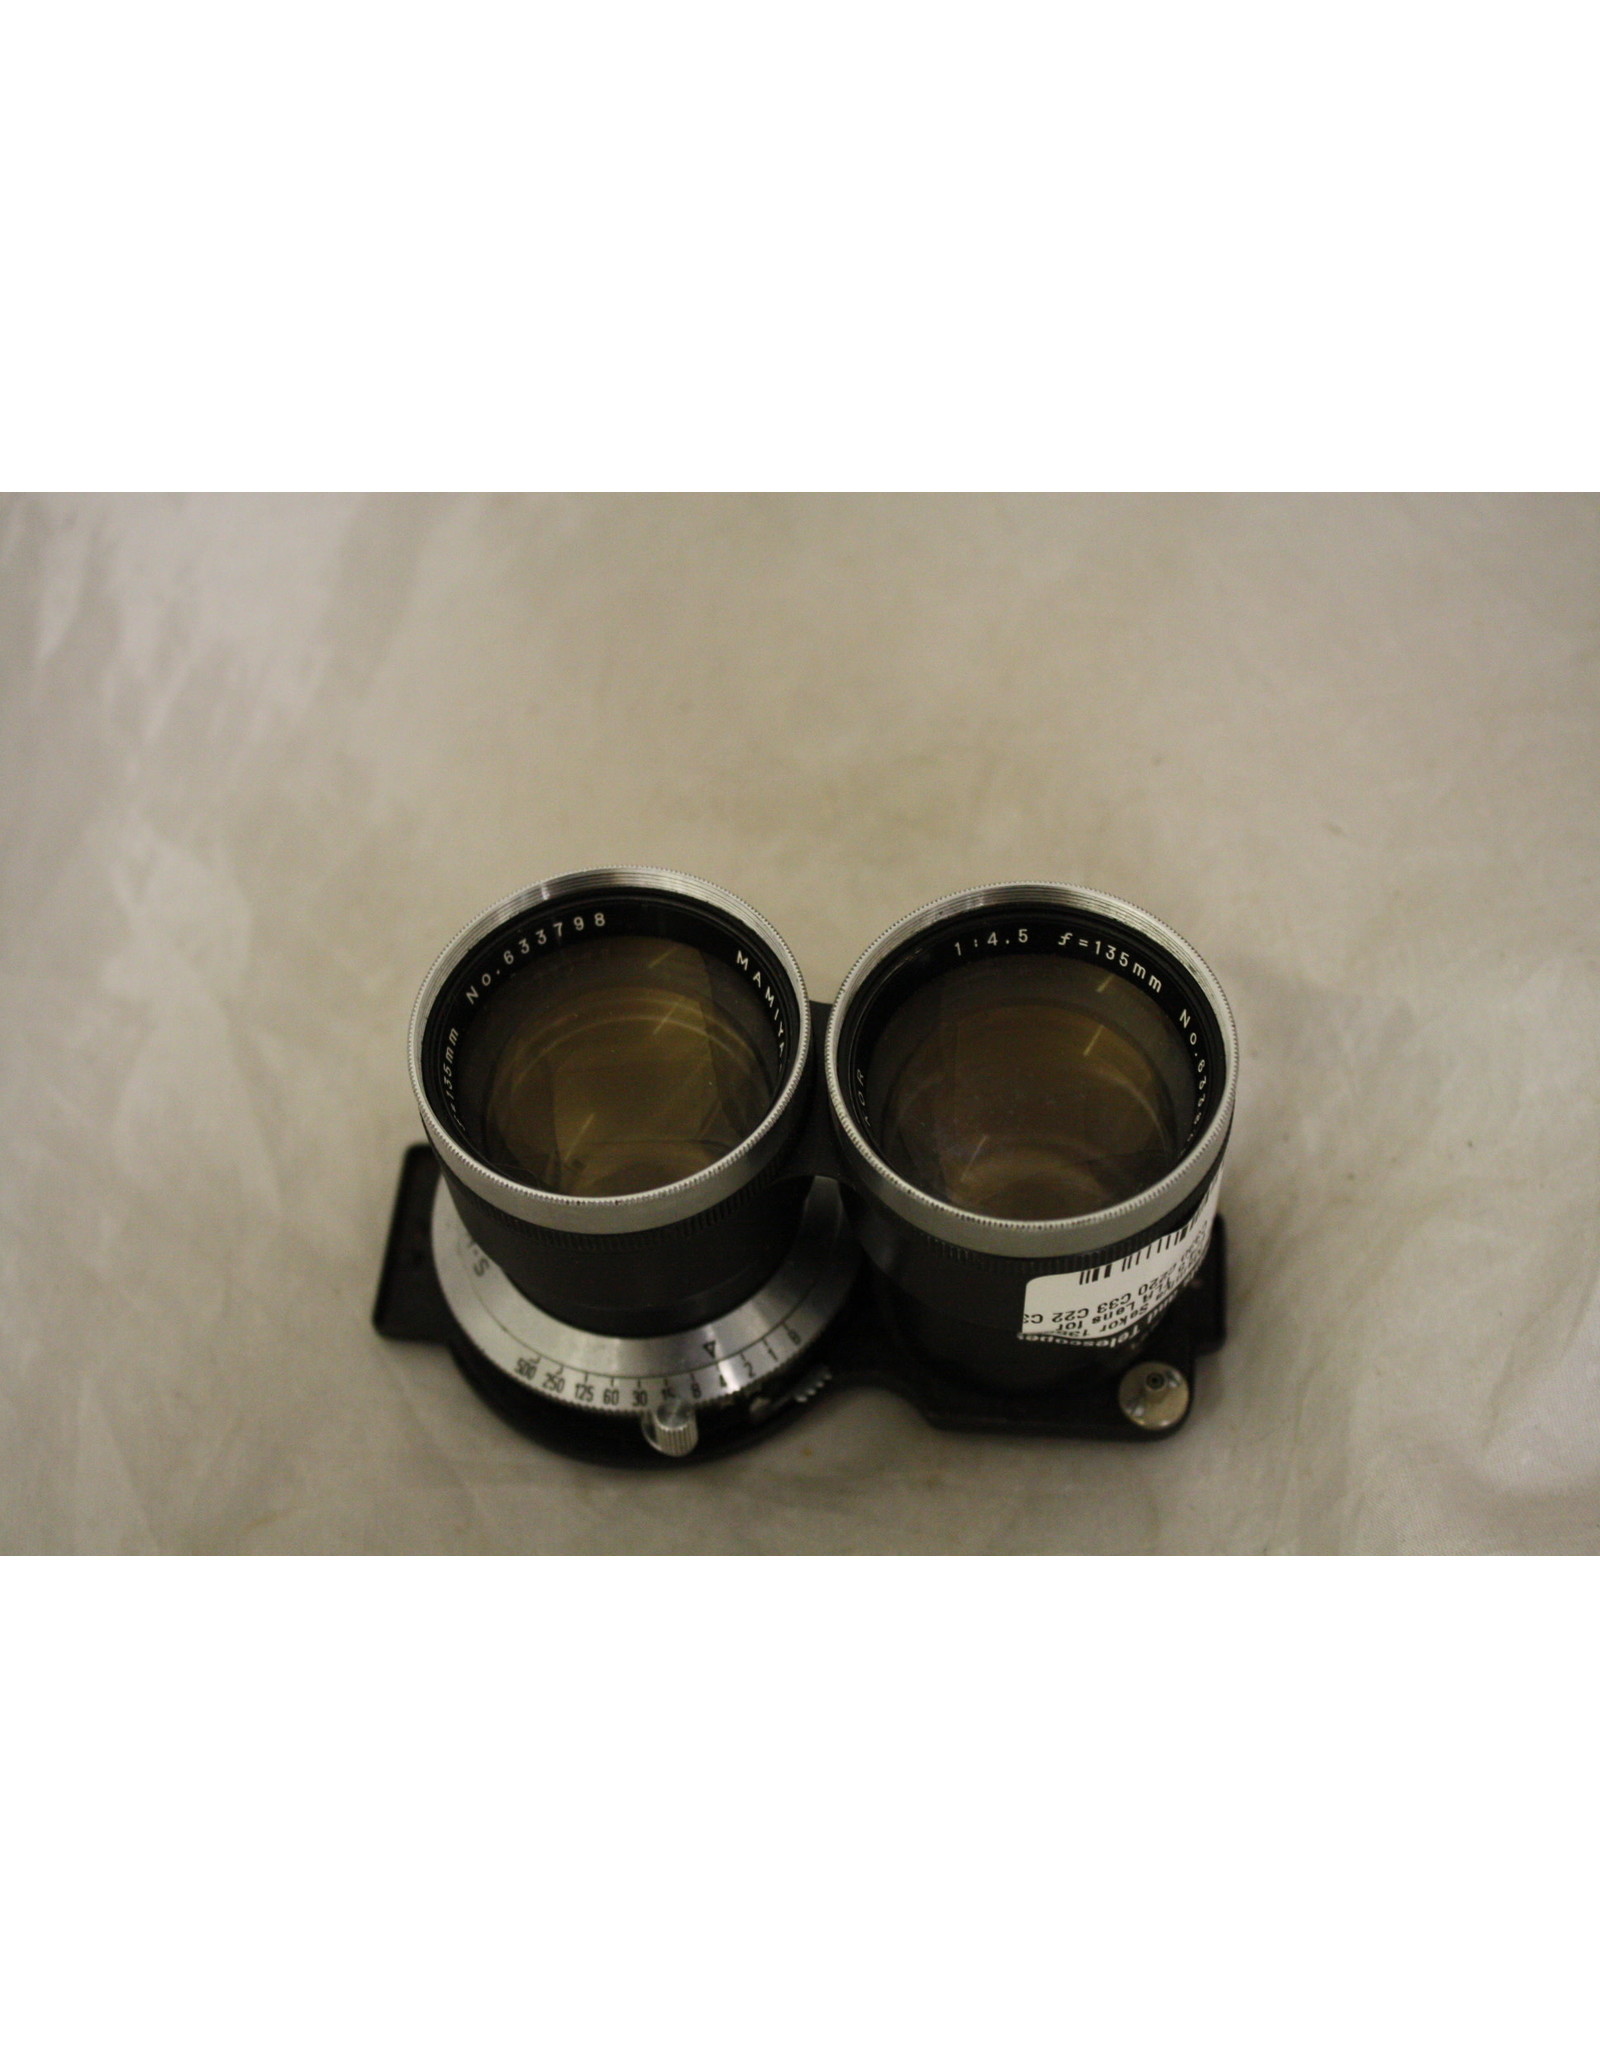 Mamiya Mamiya Sekor 135mm F/4.5 TLR Lens for C330 C220 C33 C22 C3